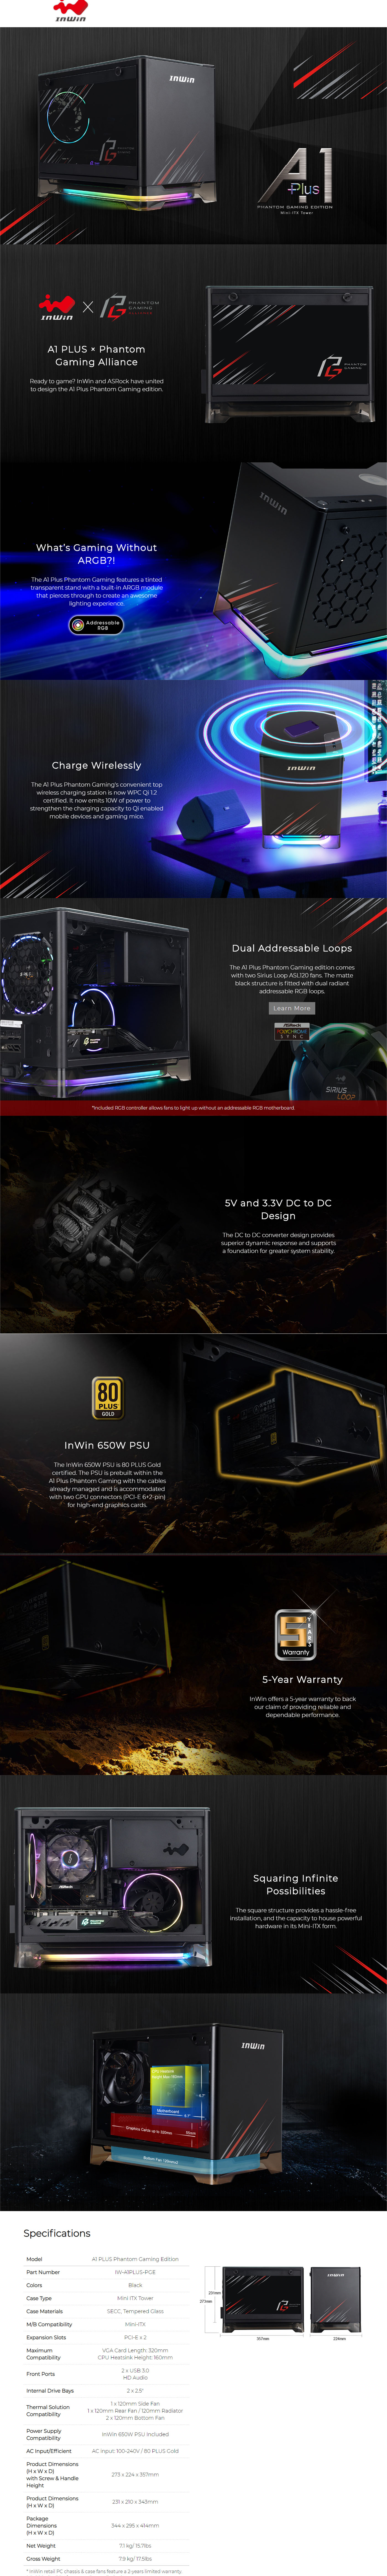 Buy Online InWin A1 Plus Mini ITX Tower with 650w PSU - Black Asrock Phantom